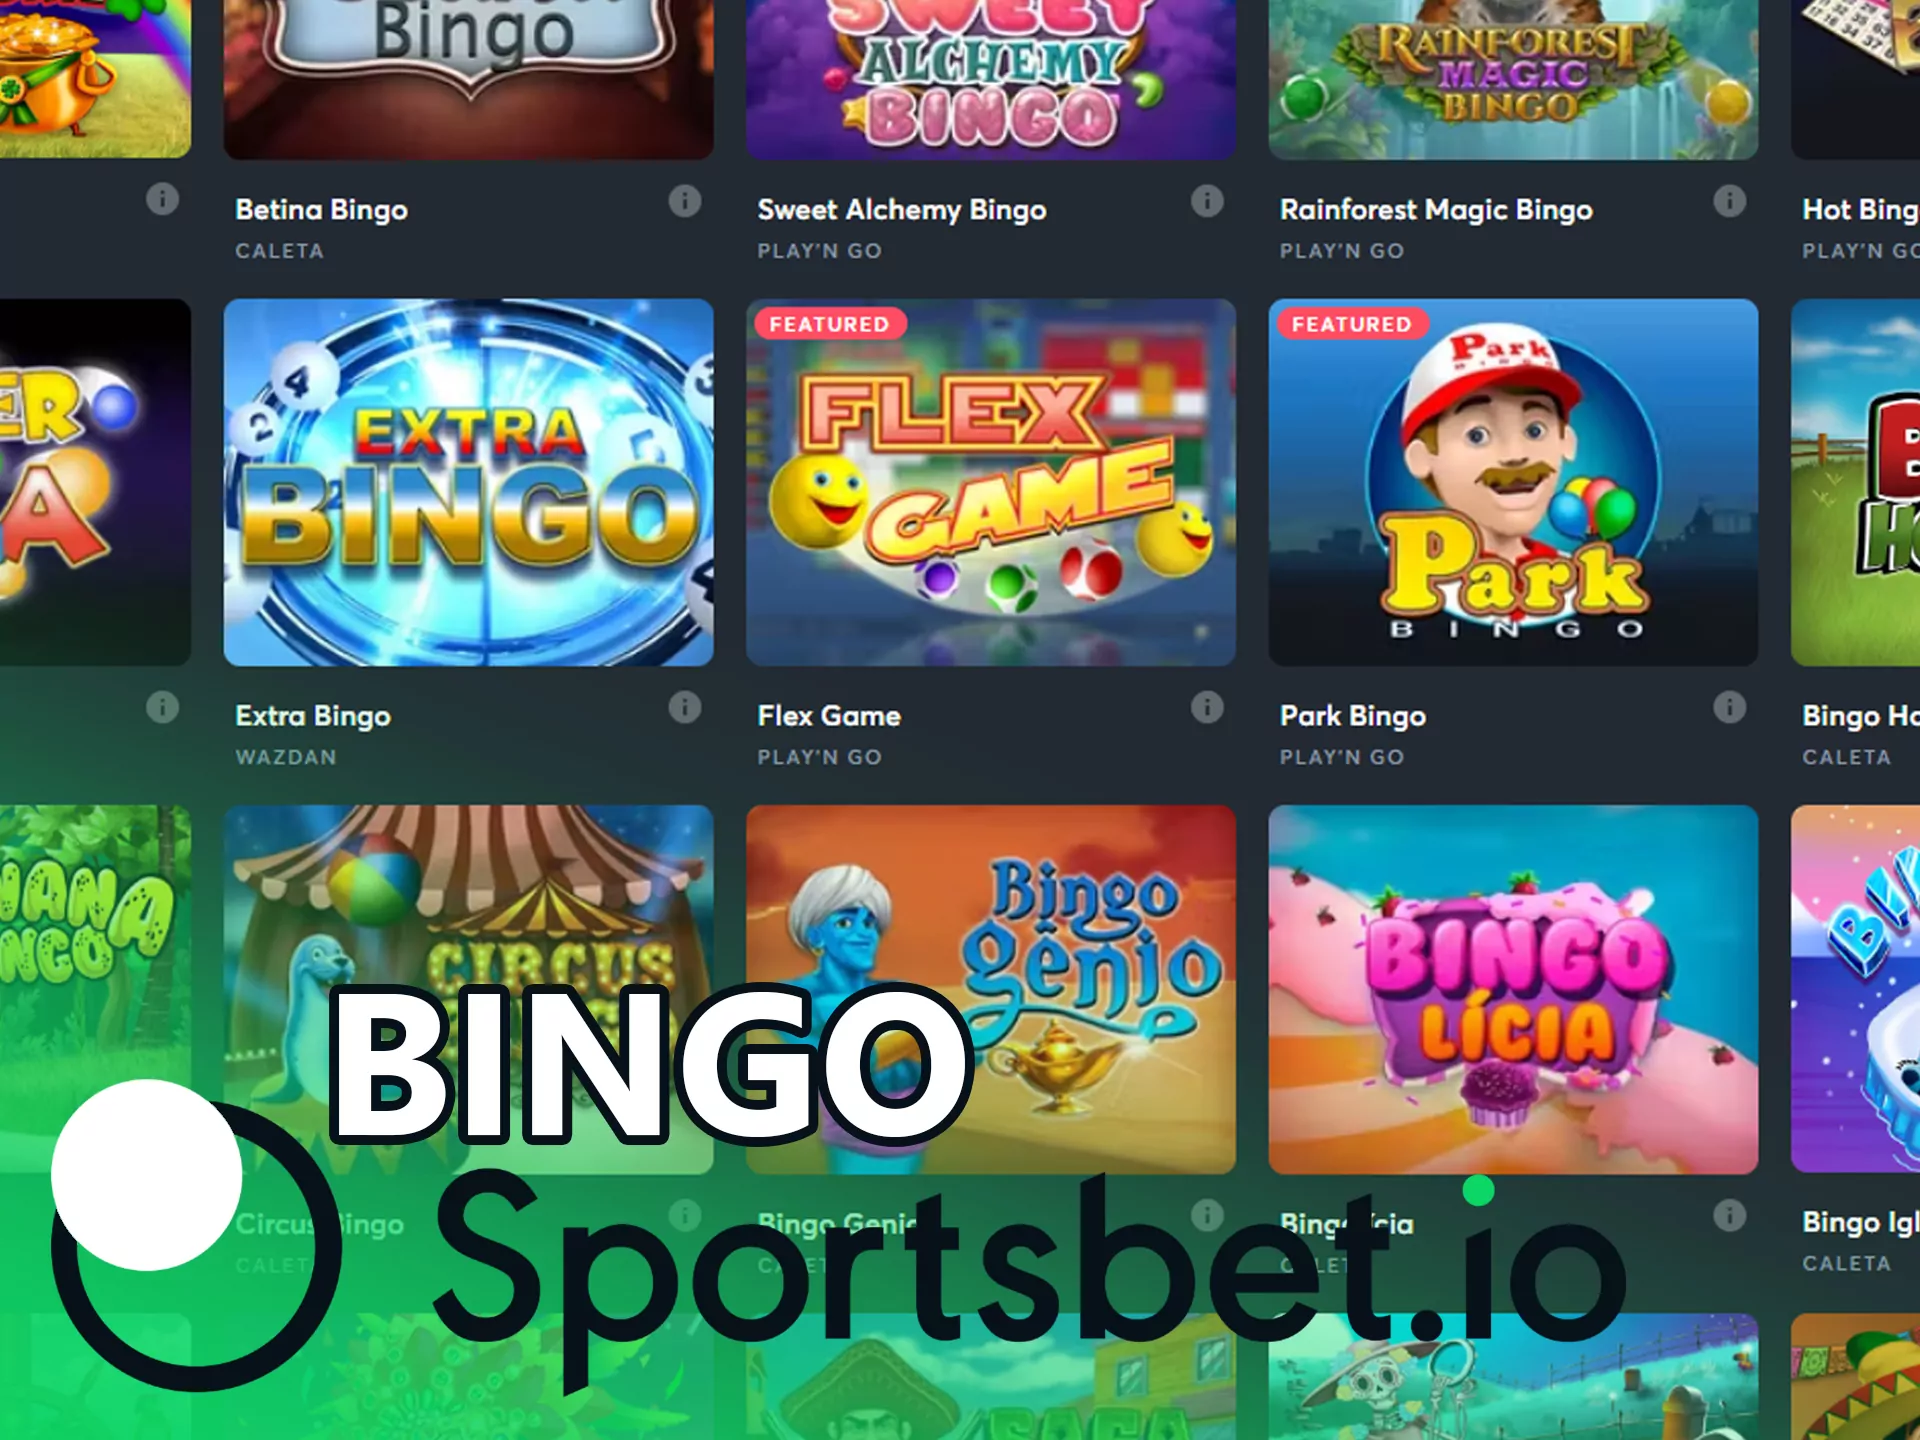 Sportsbet has also bingo games in its casino.